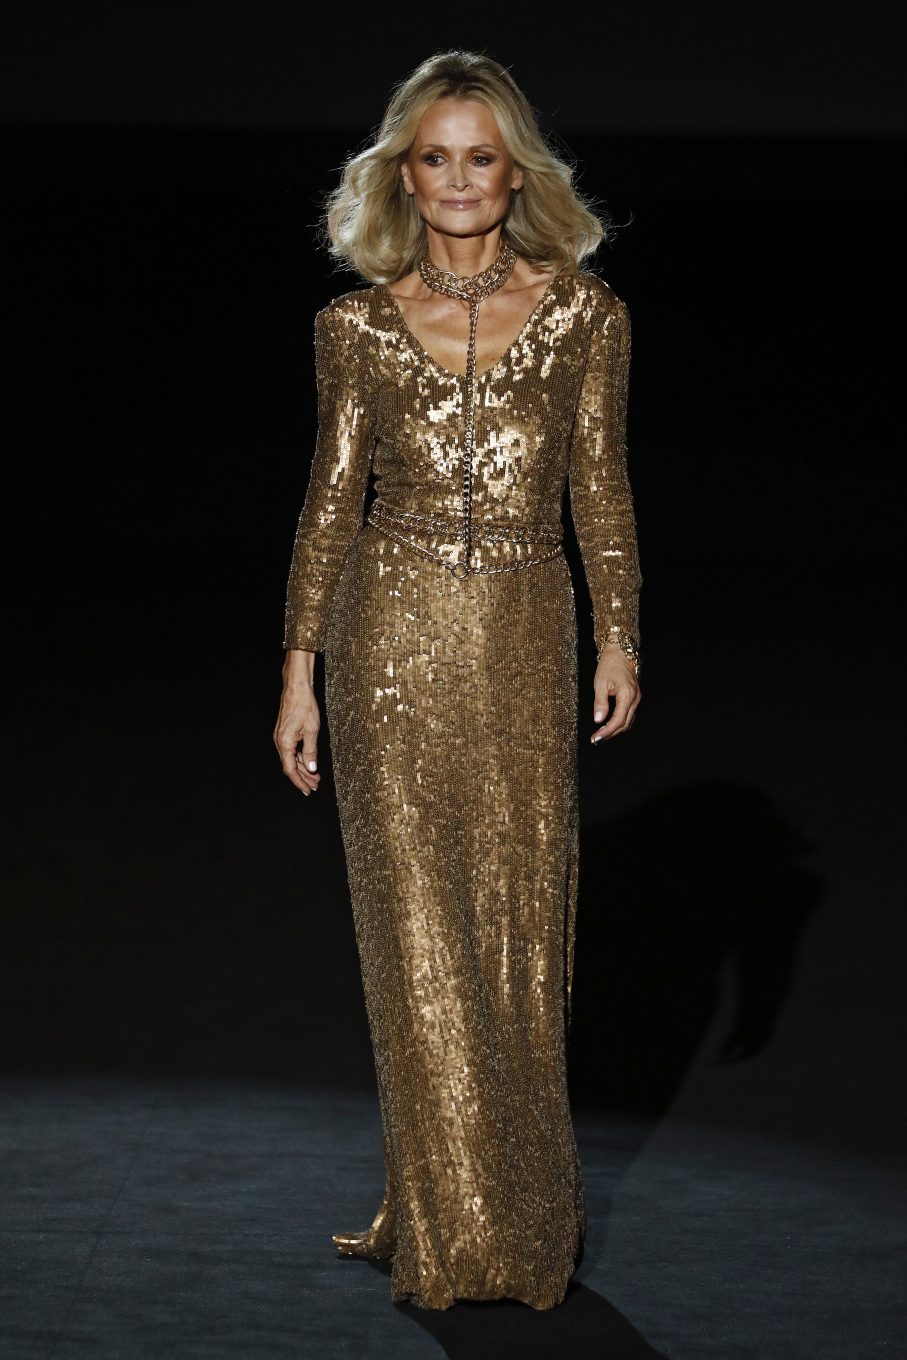 Modelo con vestido de glitter dorado de Malne